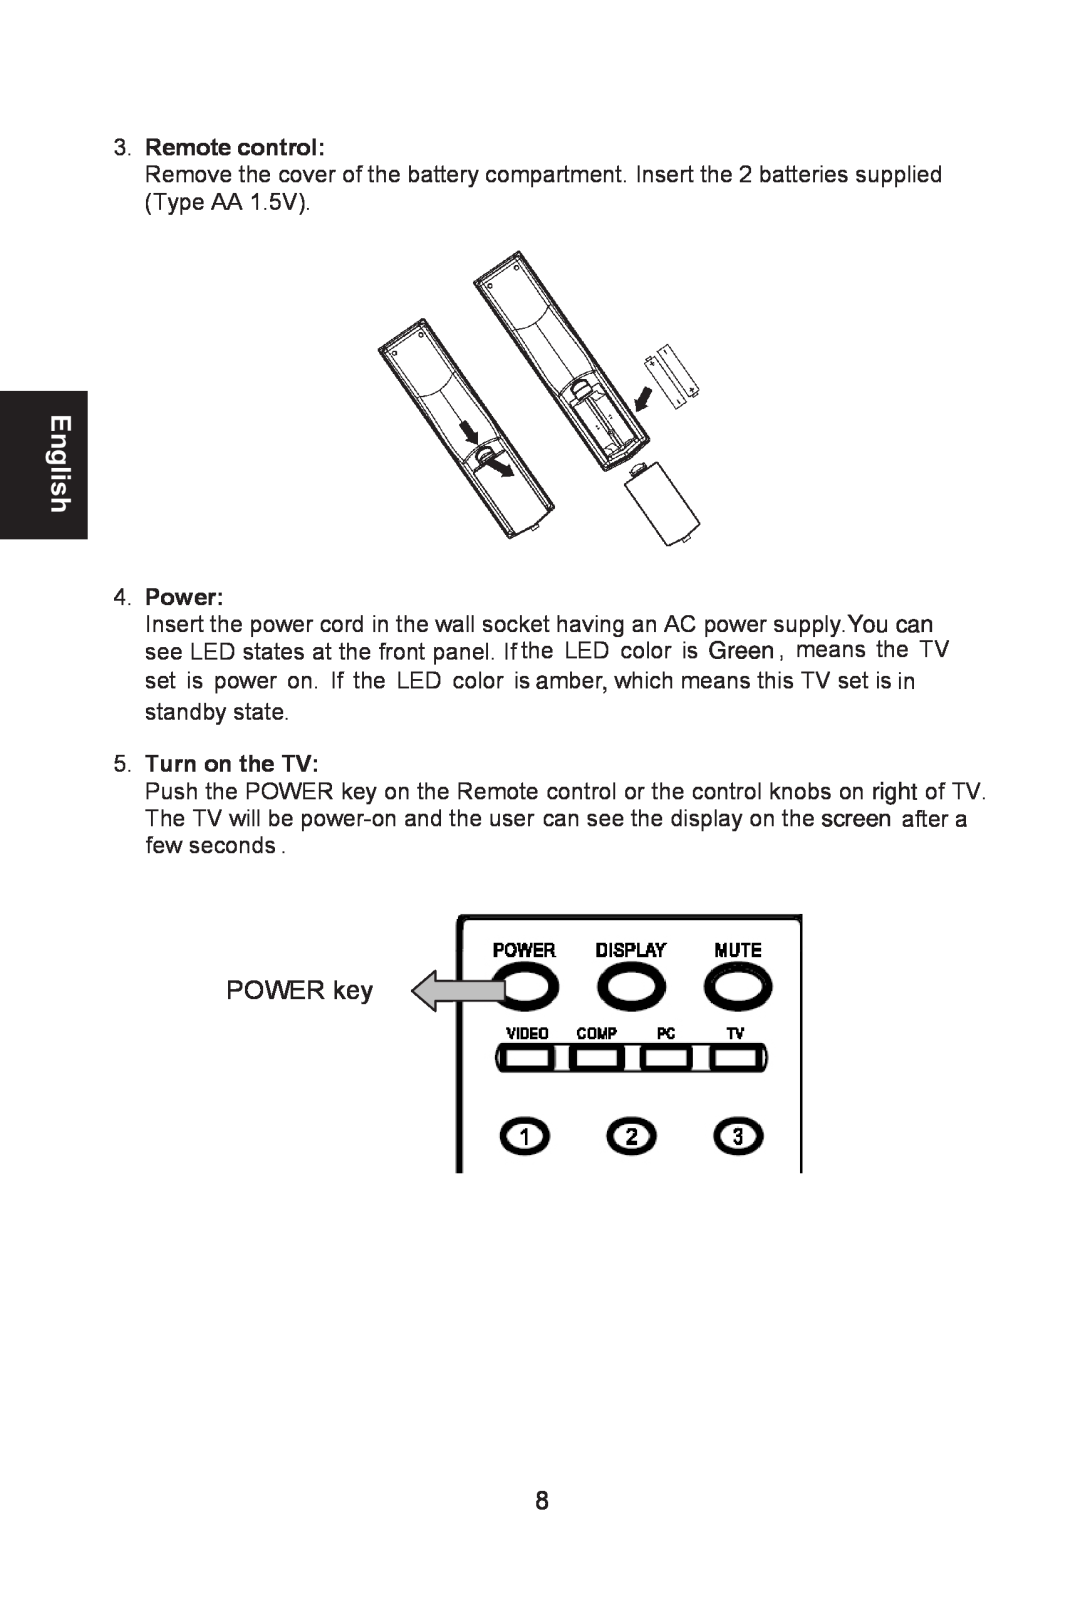 AOC L26W661 user manual POWER key, Remote control, Power, Turn on the TV, English 